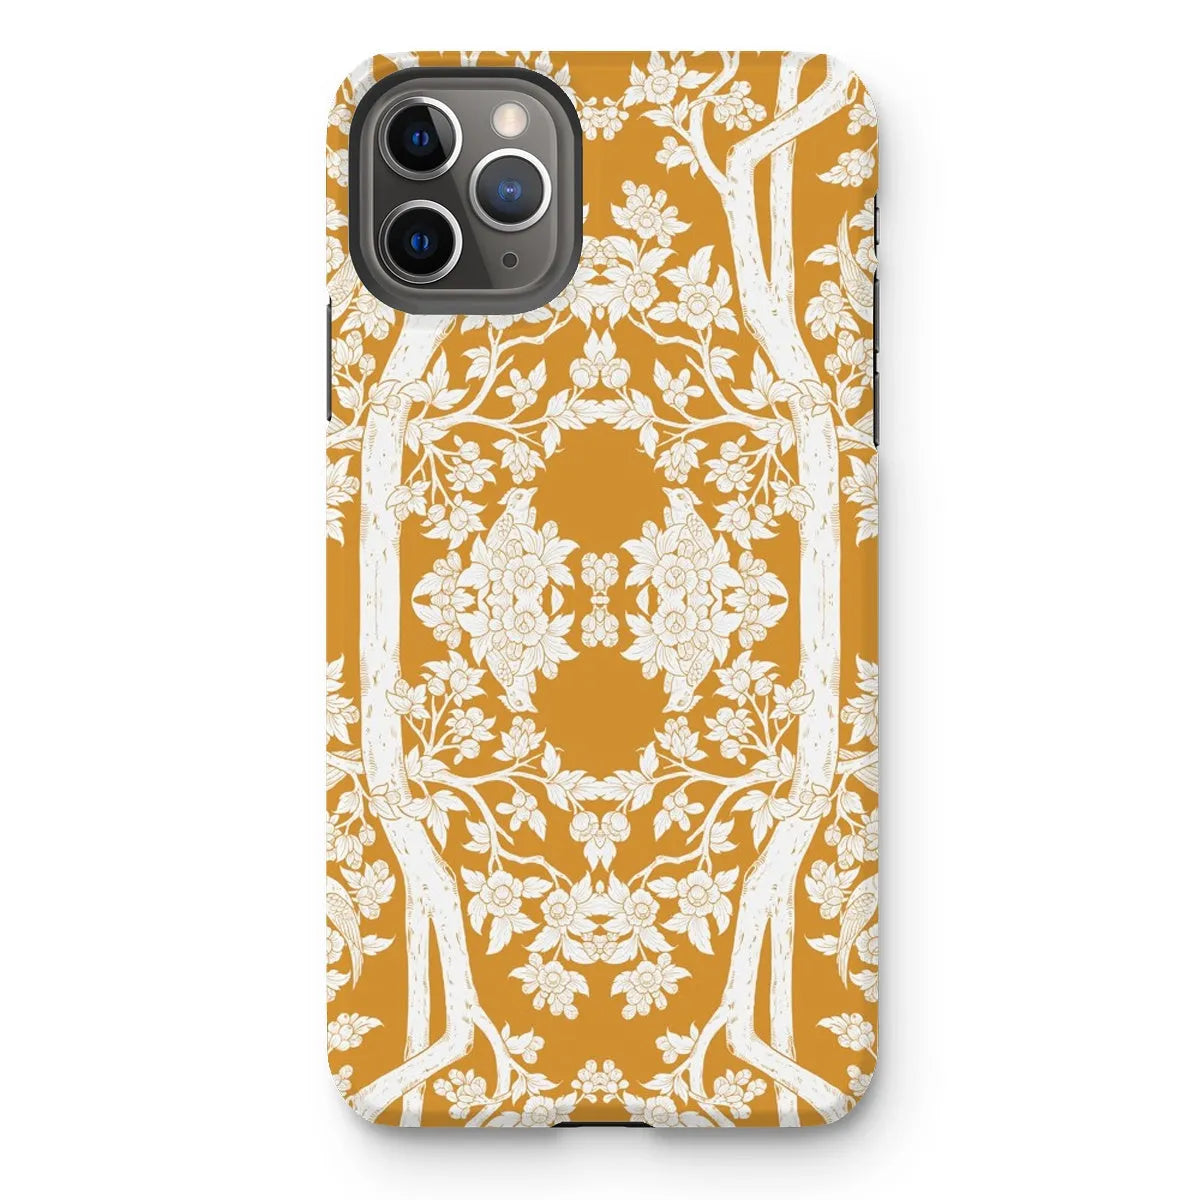 Aviary Orange Aesthetic Pattern Art Phone Case - Iphone 11 Pro Max / Matte - Mobile Phone Cases - Aesthetic Art